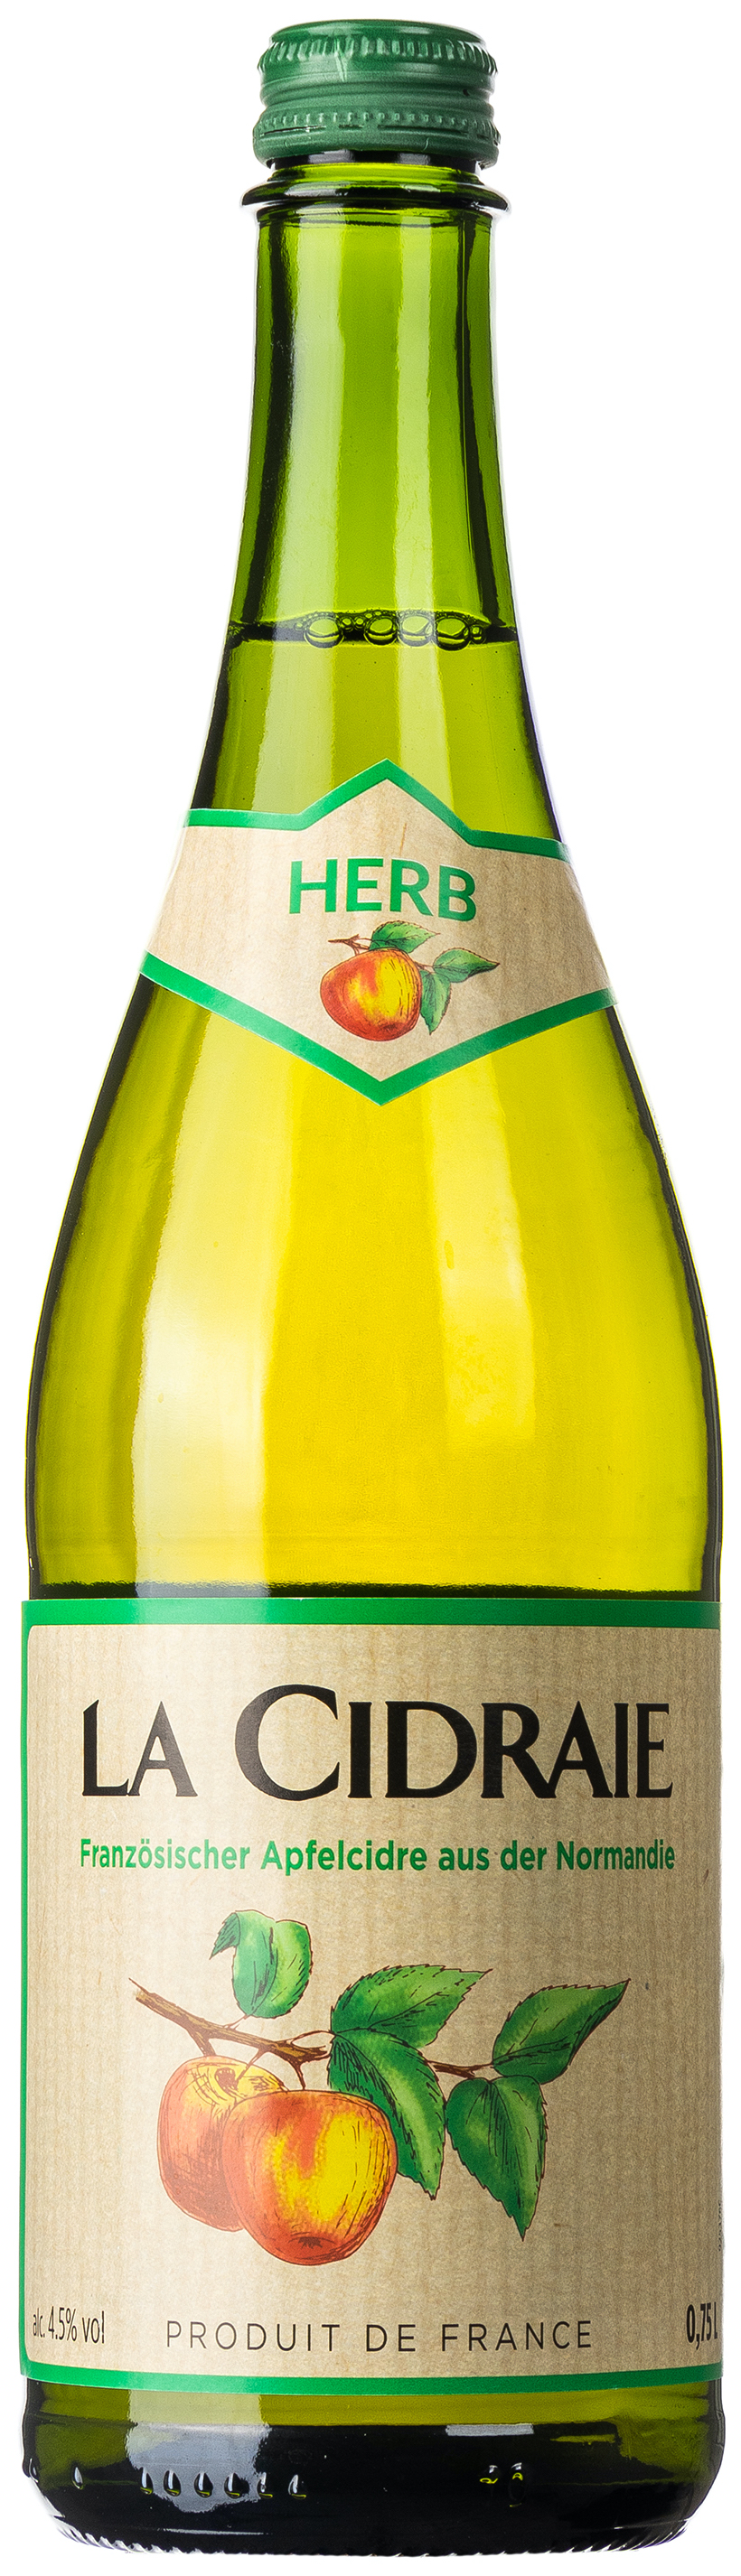 La Cidraie Apfel Cidre Herb 4,5% vol. 0,75L